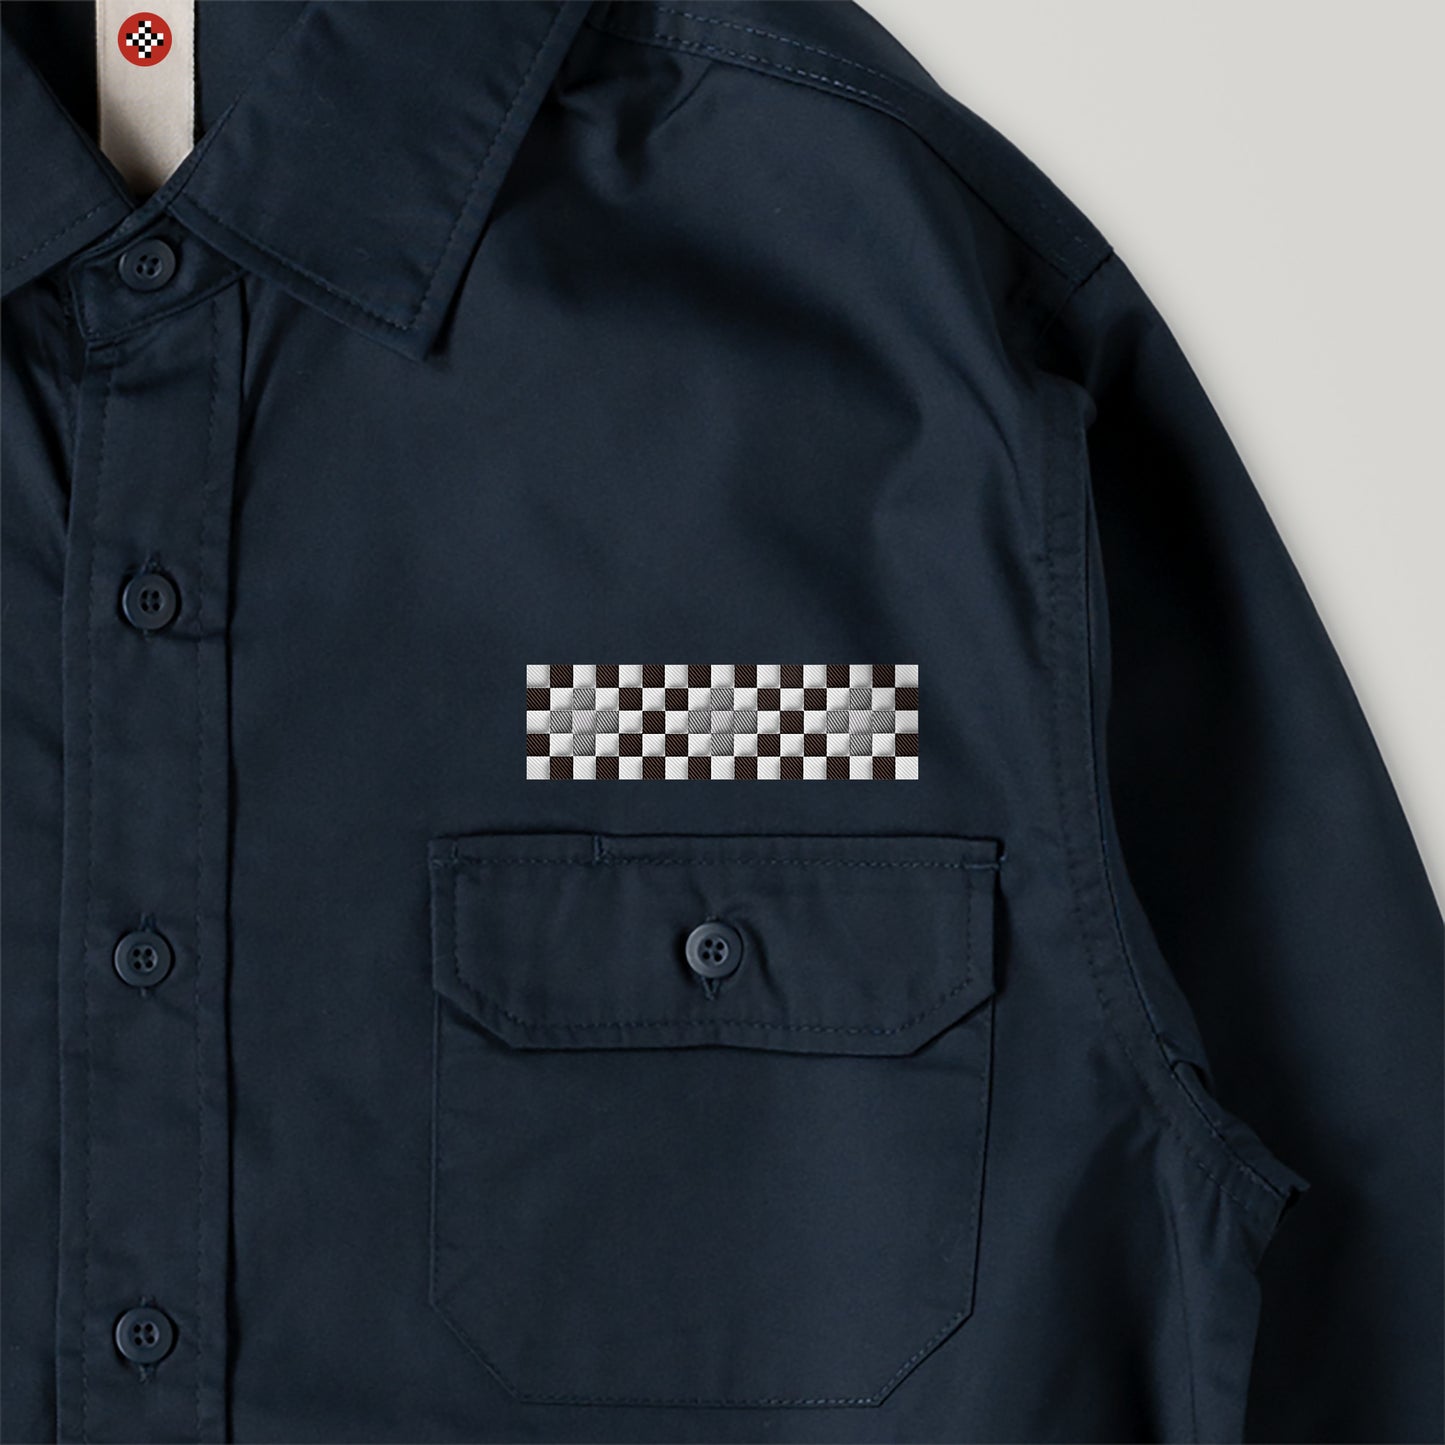 Monochrome checkered work shirt